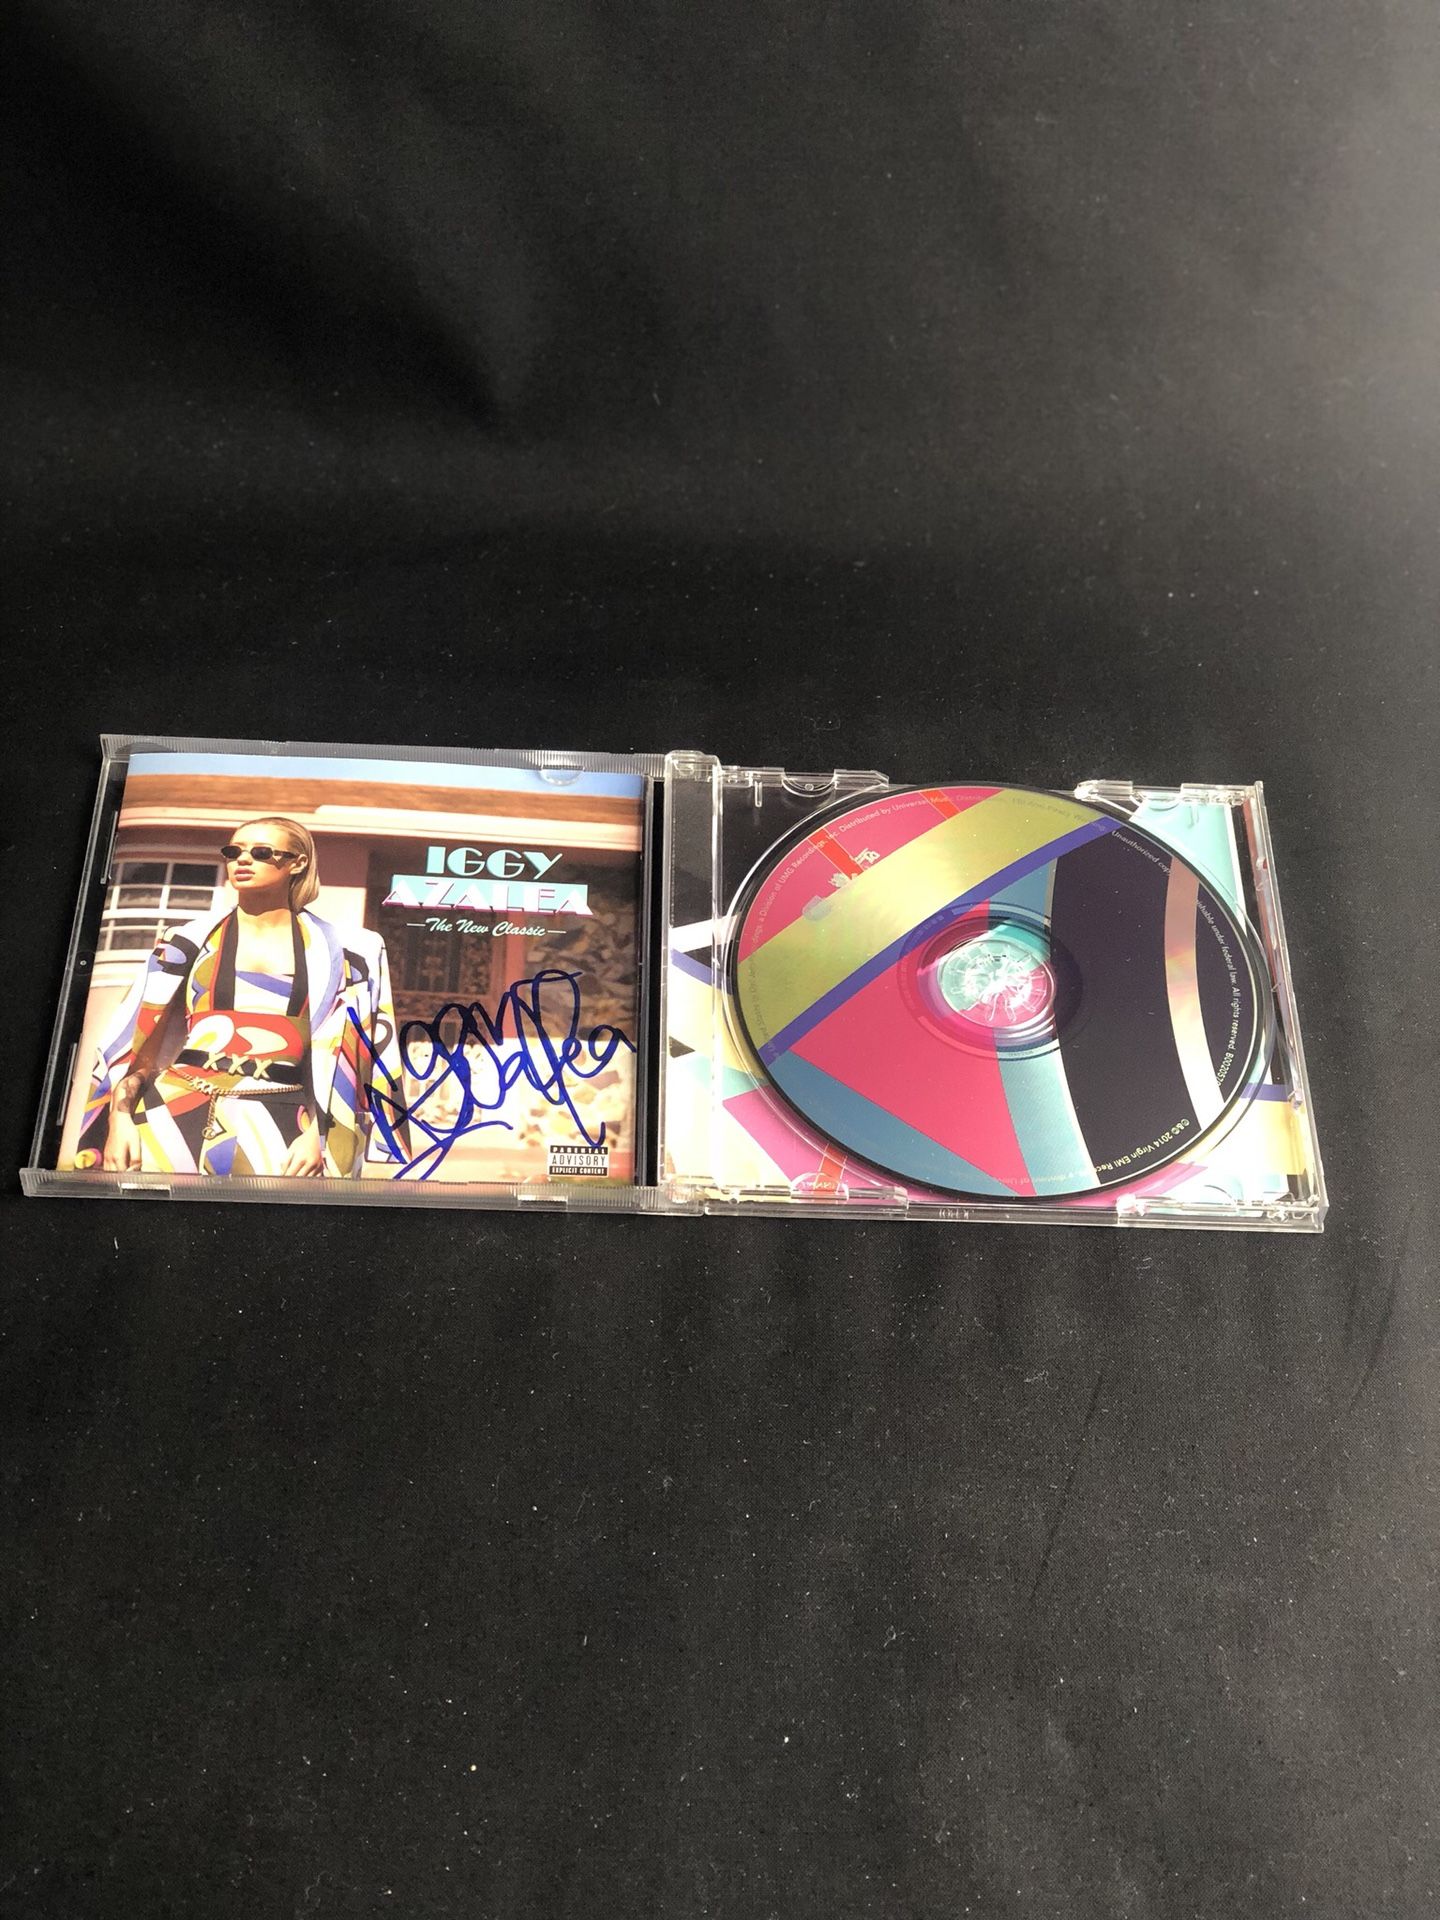 Iggy Azalea signed CD cover